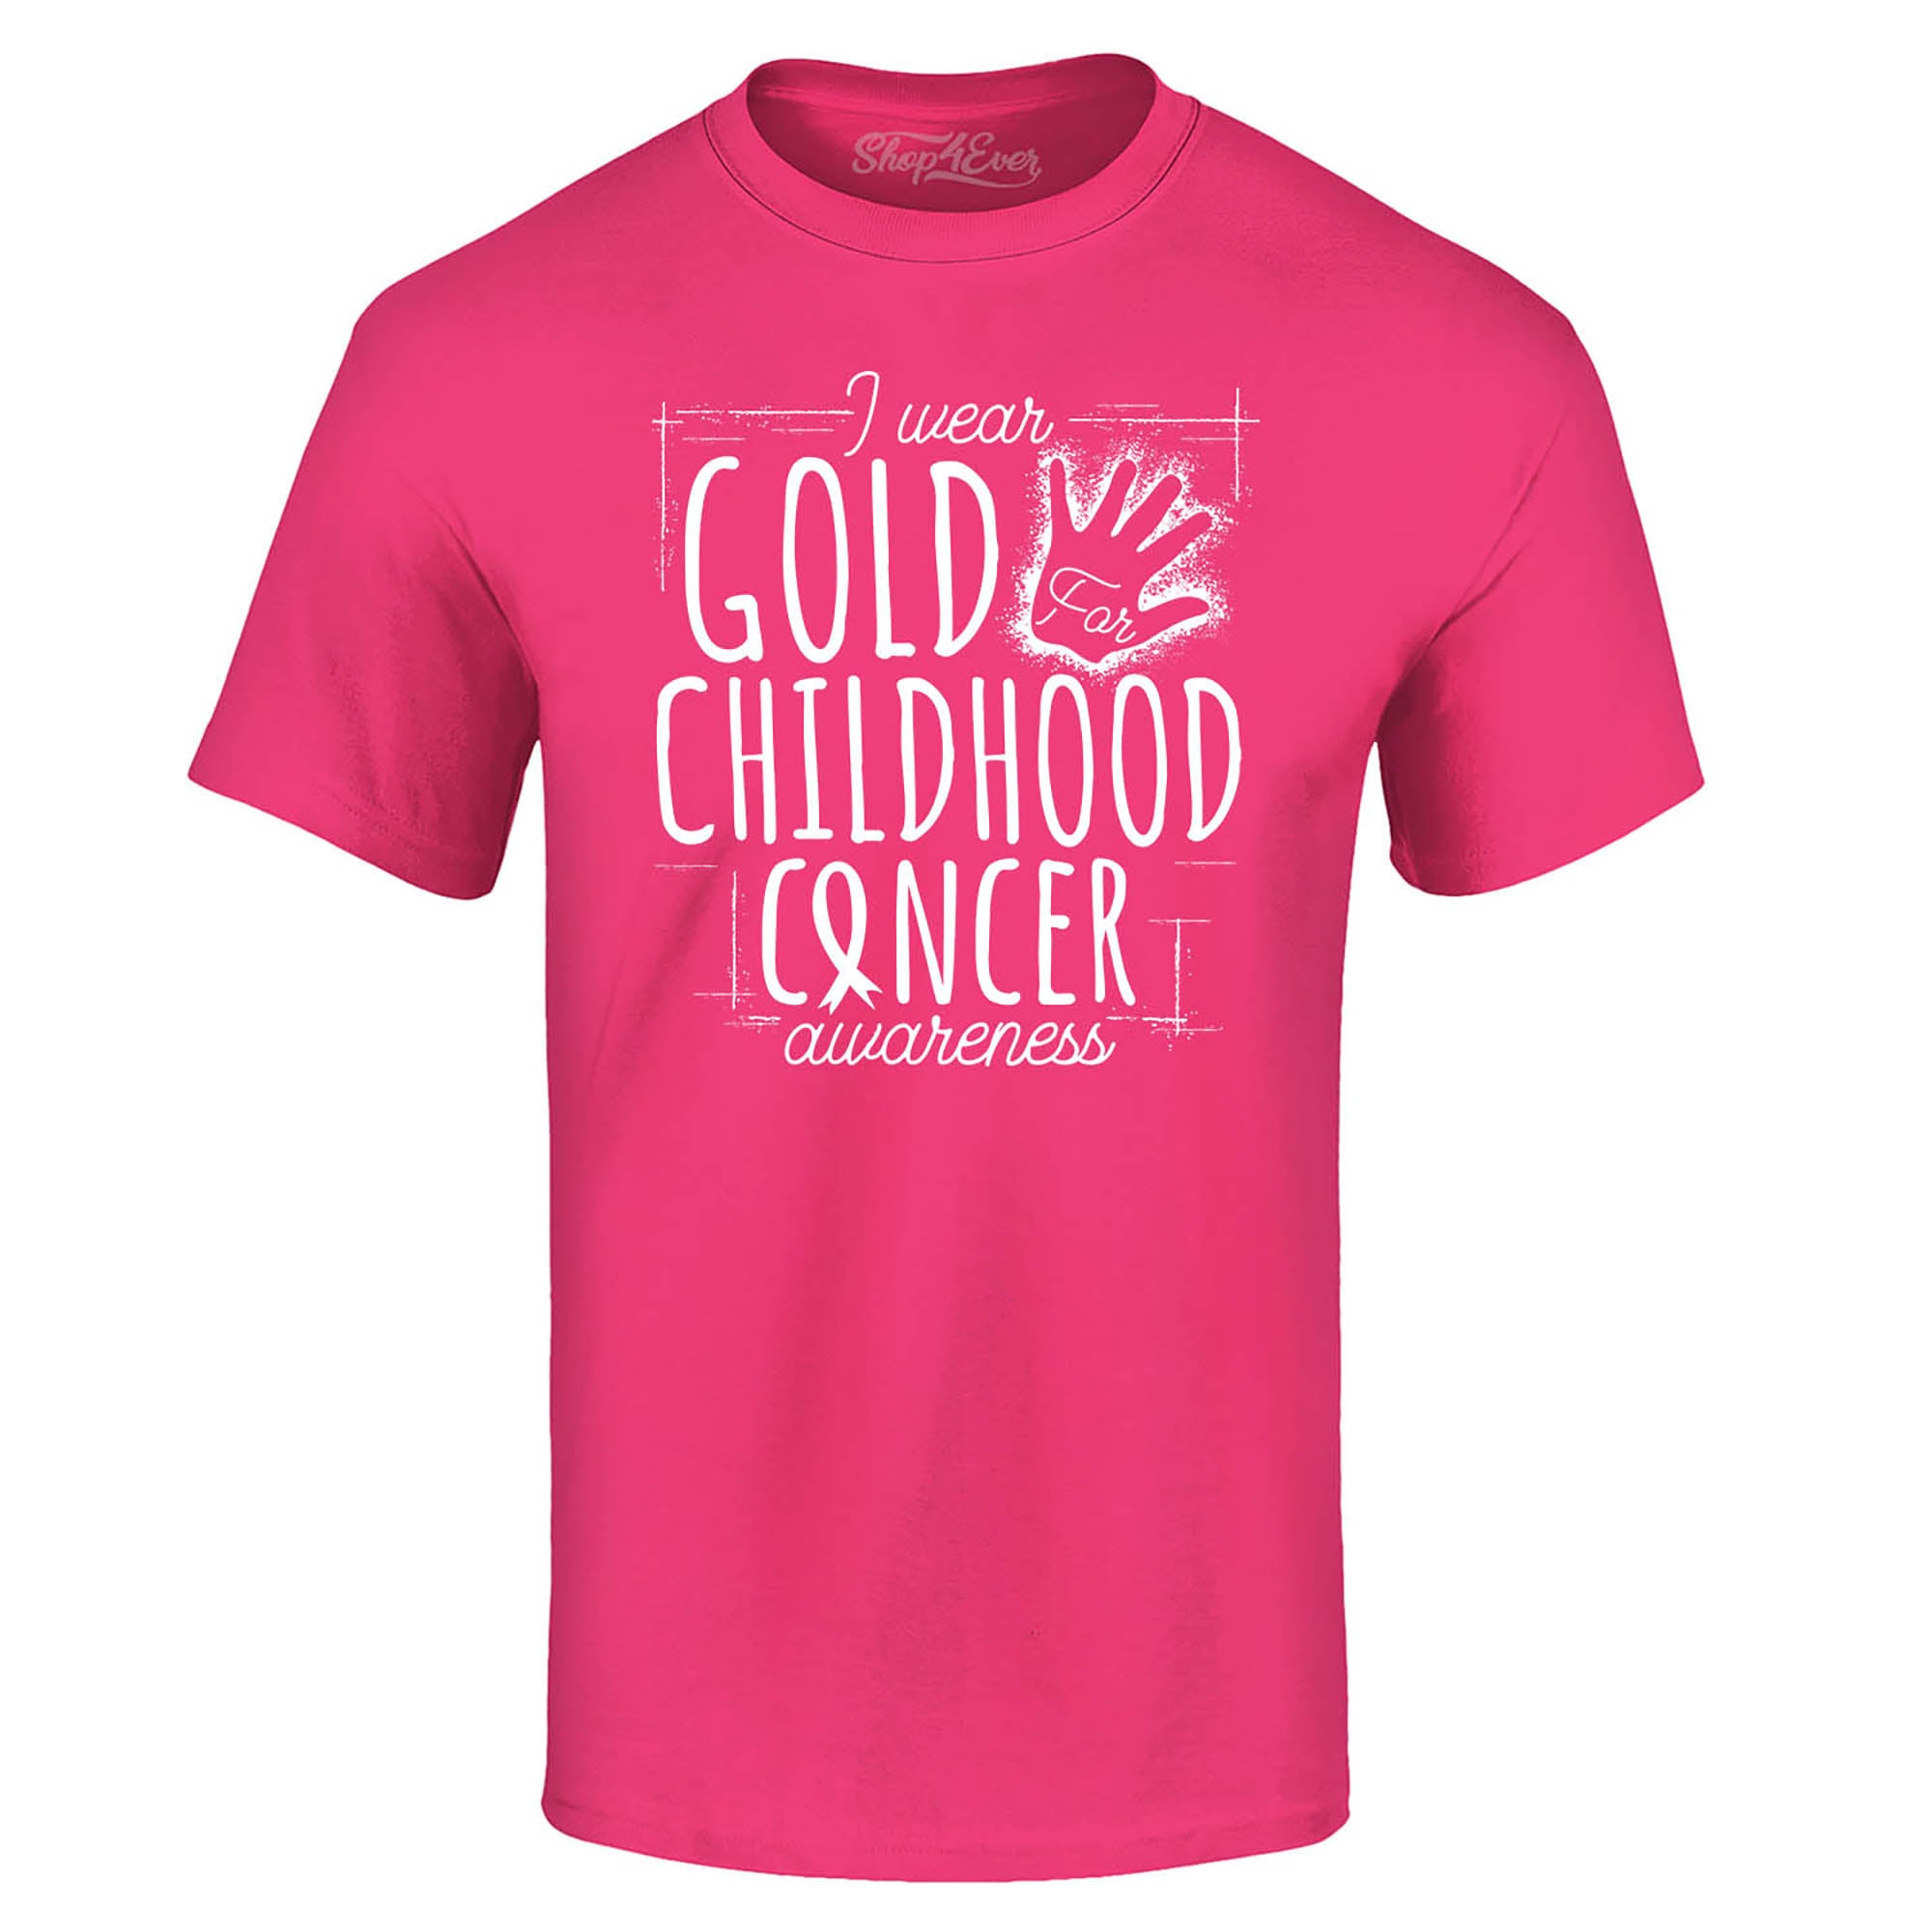 I Wear Gold for Childhood Cancer Awareness T-Shirt